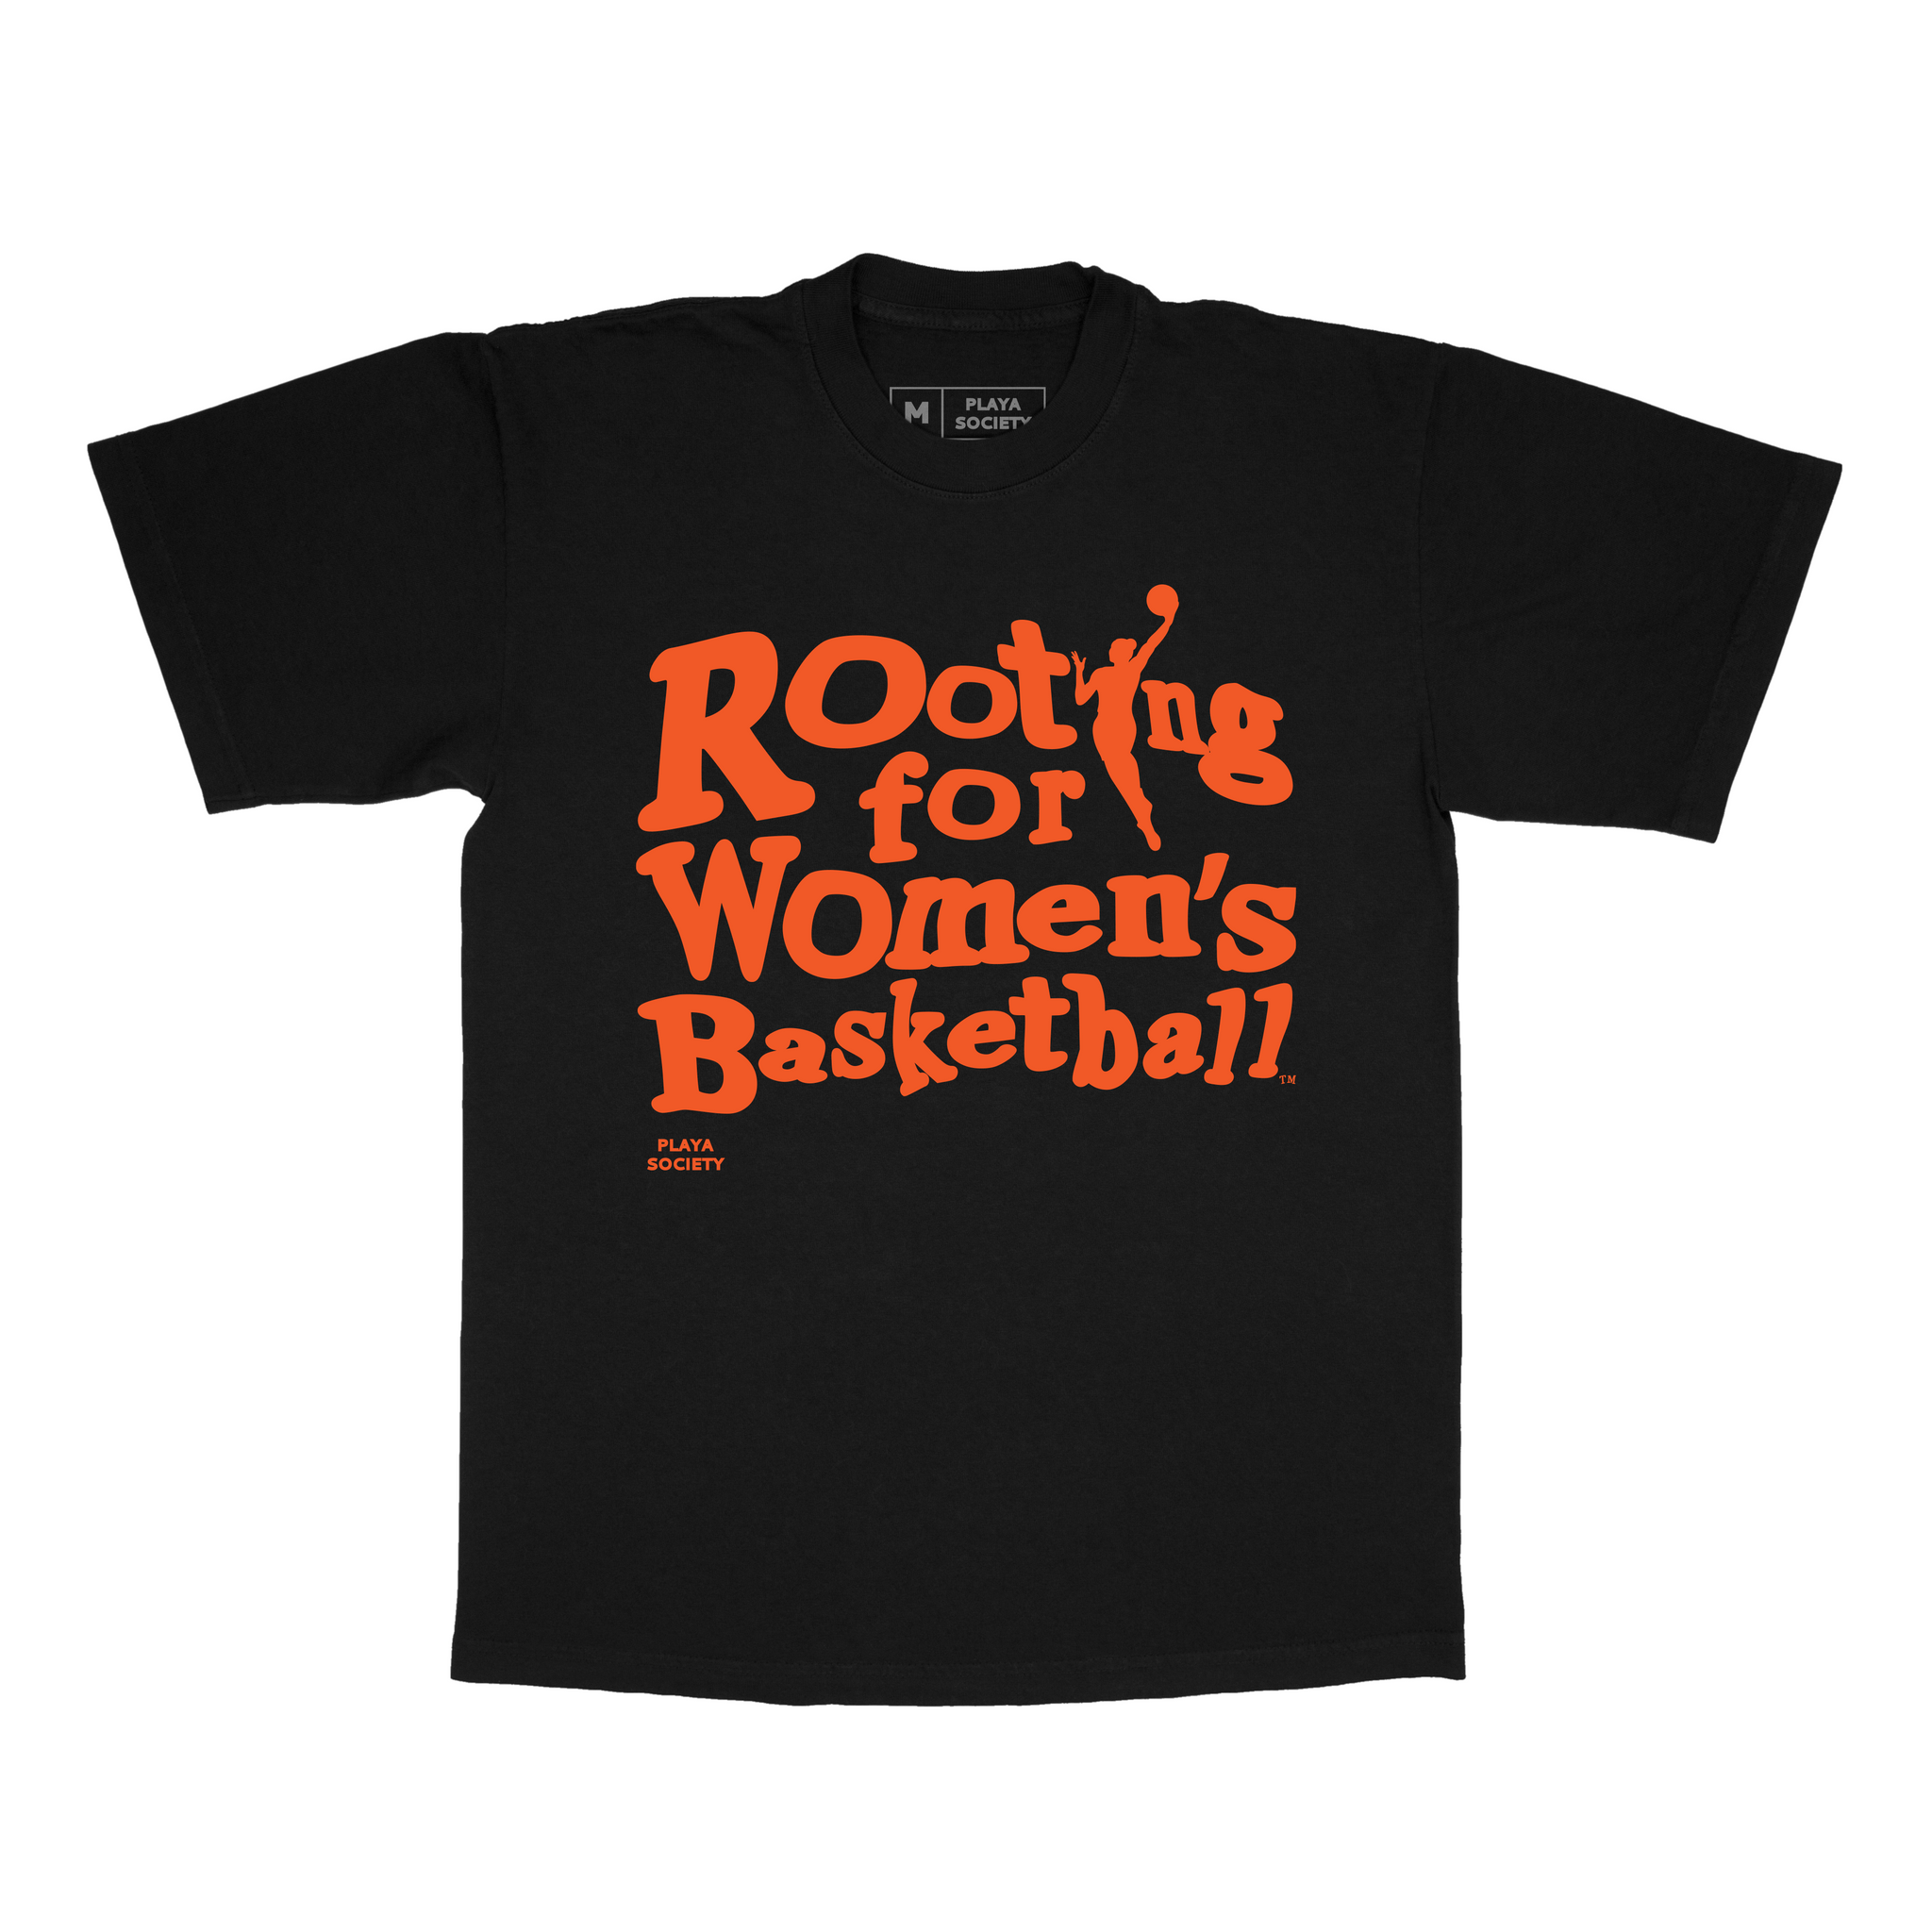 Playa Society WNBA Rooting For WBB T-shirt